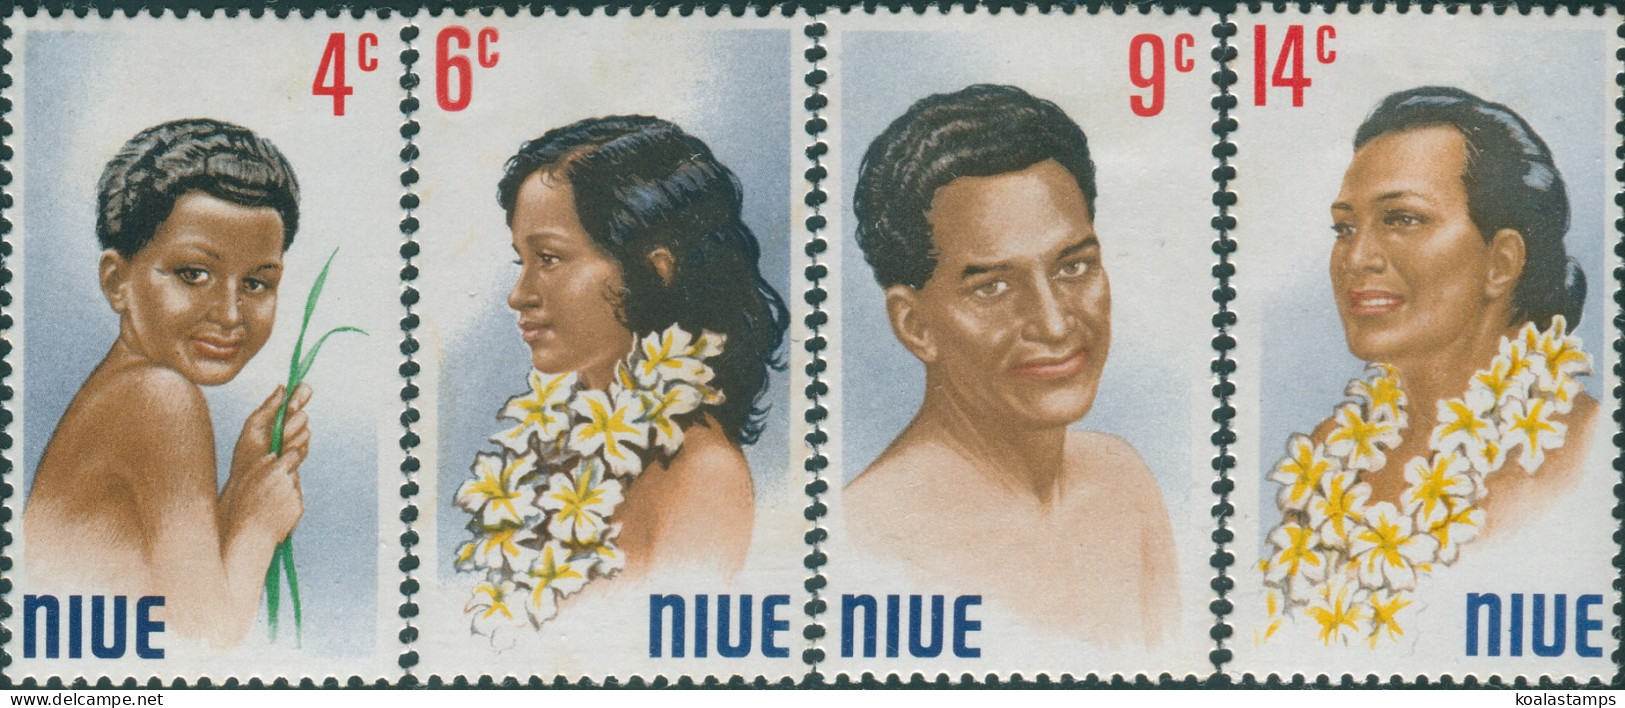 Niue 1971 SG162-165 Niuean Portraits Set MNH - Niue